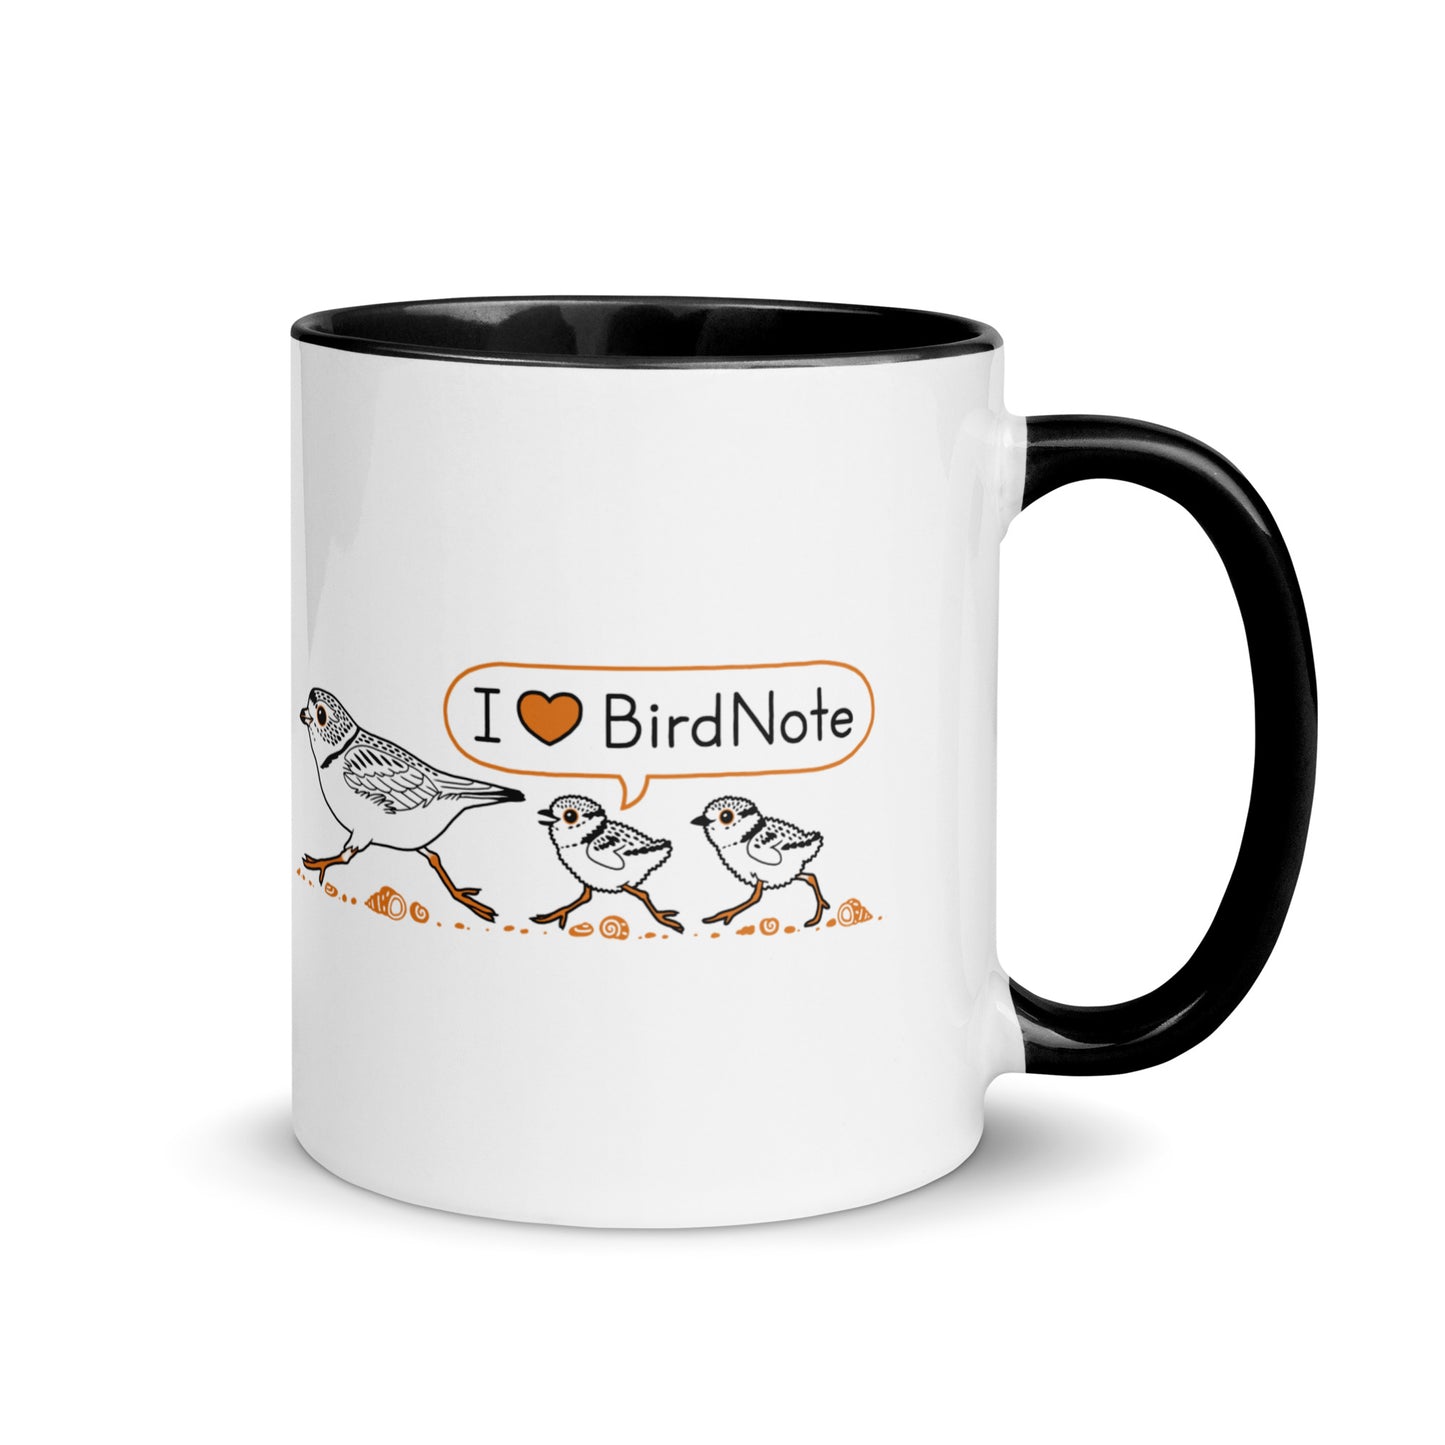 "I Love BirdNote" Mug with Color Inside